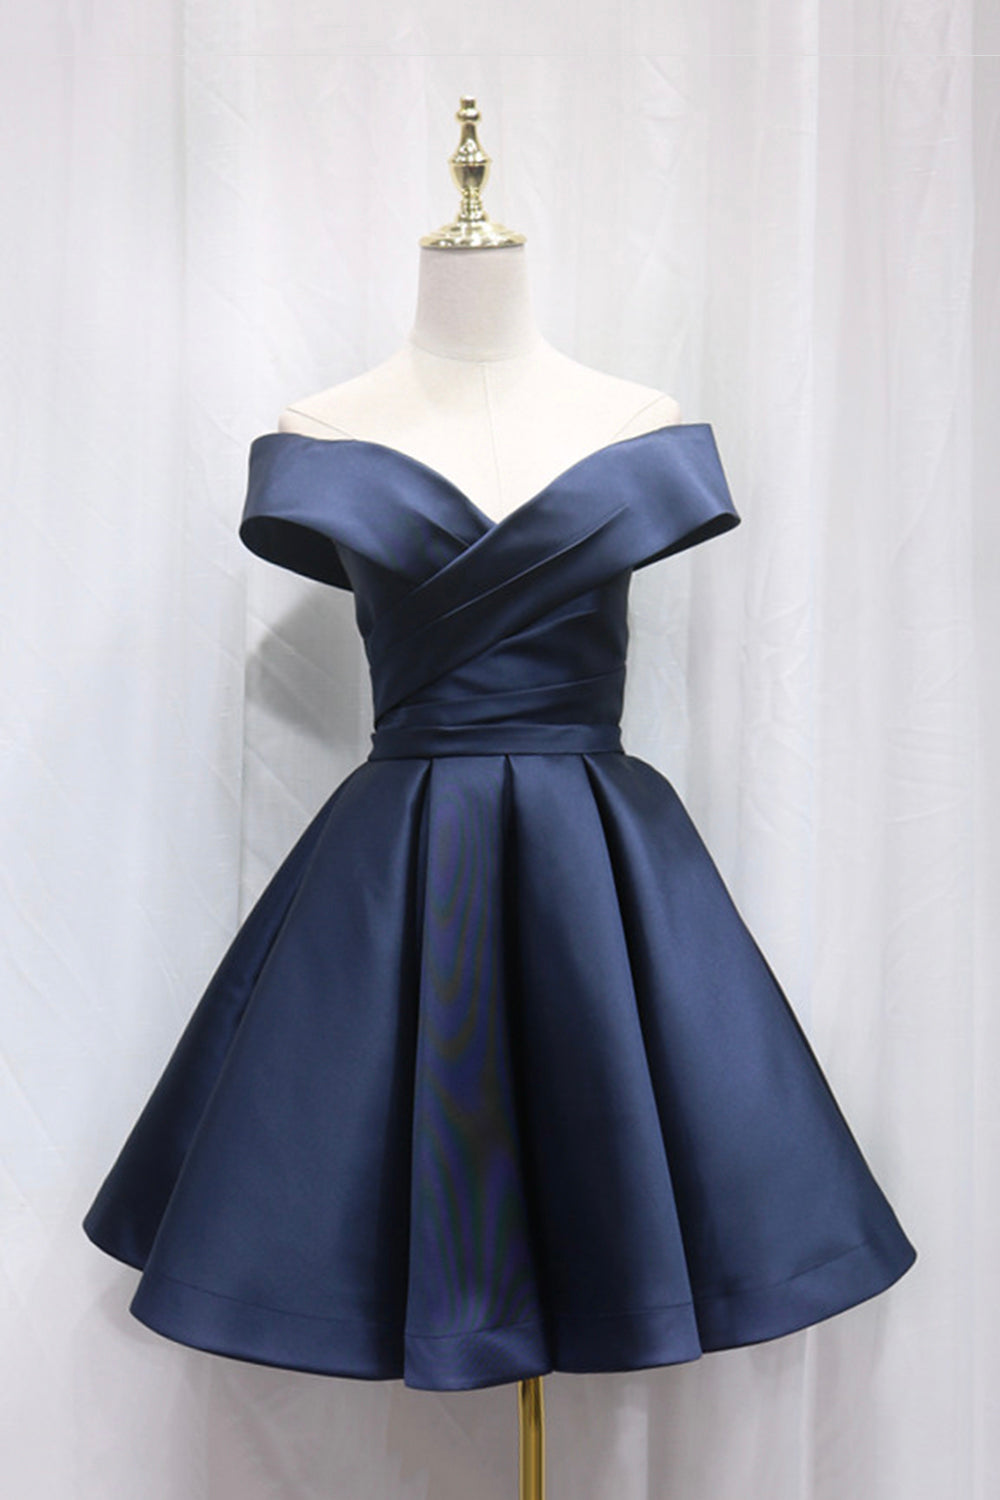 Formals Dresses Long, Simple Satin Short Prom Dress, Off Shoulder Blue Party Dress